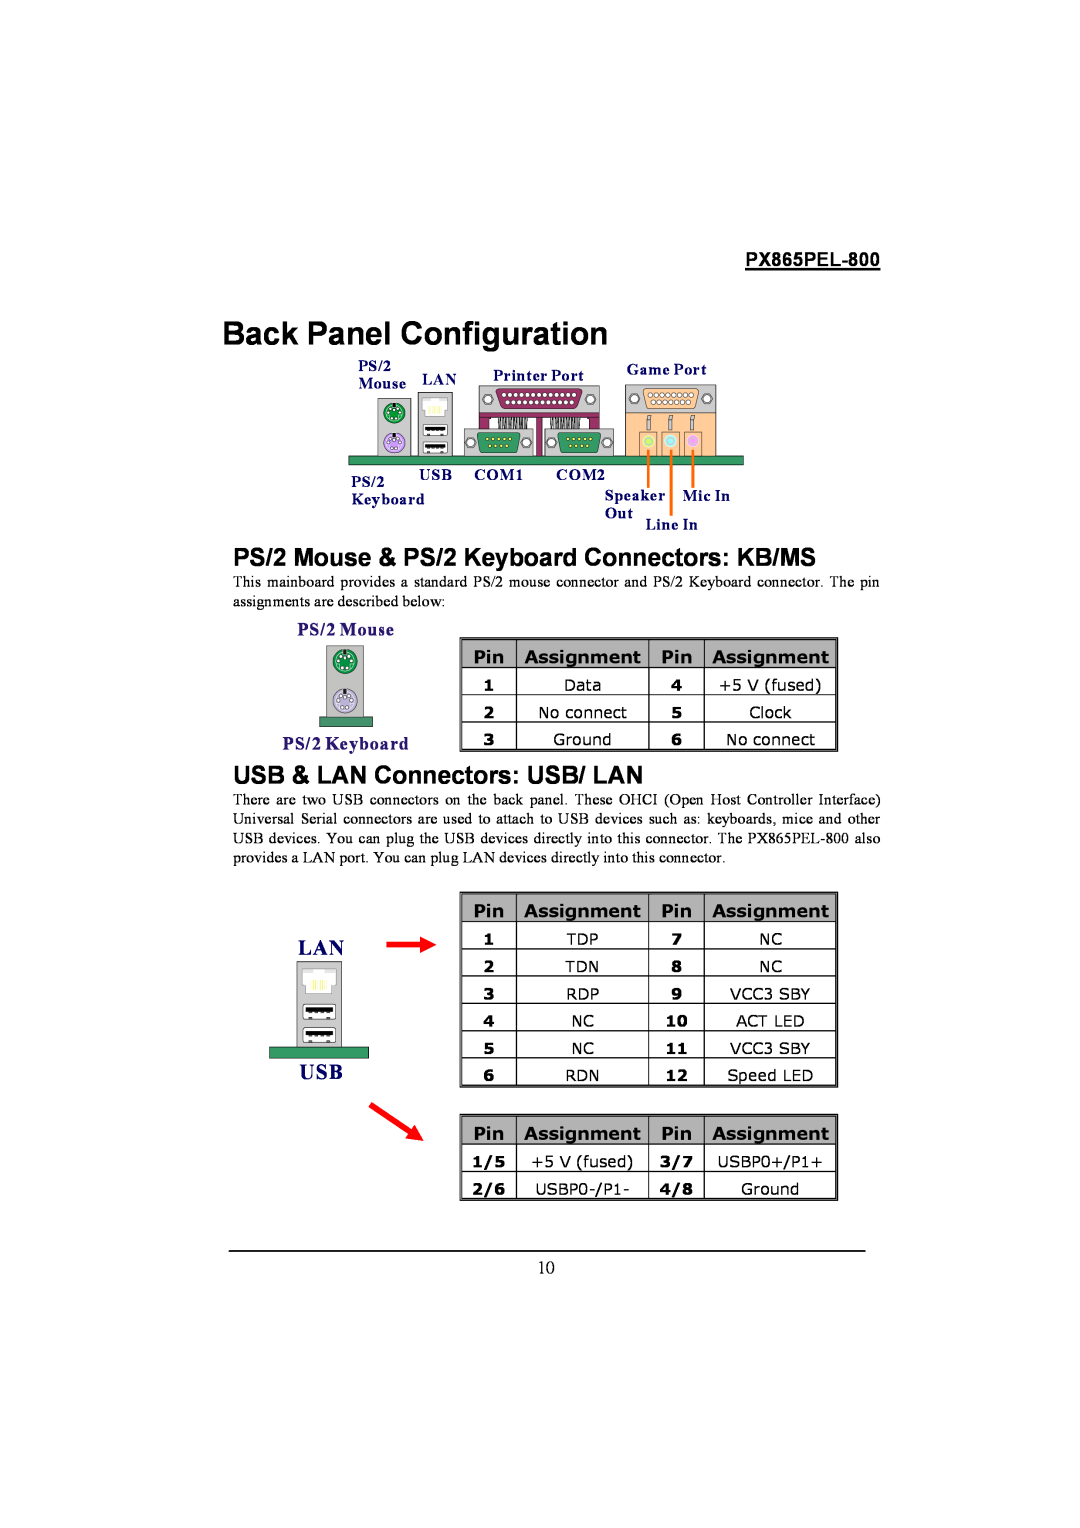 Intel PX865PEL-800 Back Panel Configuration, PS/2 Mouse & PS/2 Keyboard Connectors KB/MS, USB & LAN Connectors USB/ LAN 